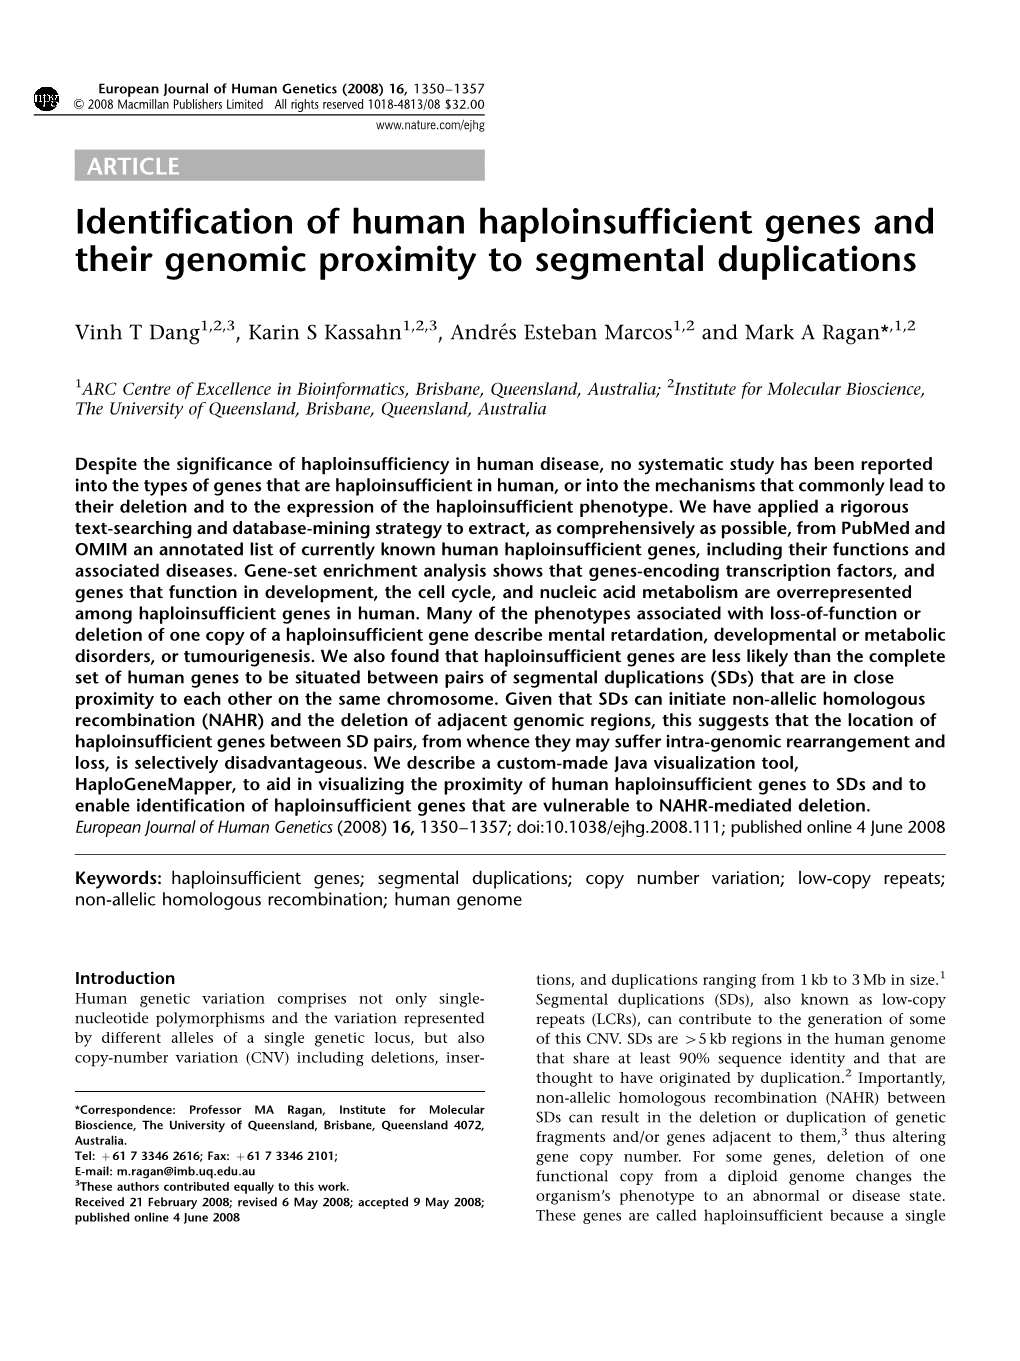 Identification of Human Haploinsufficient Genes and Their Genomic Proximity to Segmental Duplications